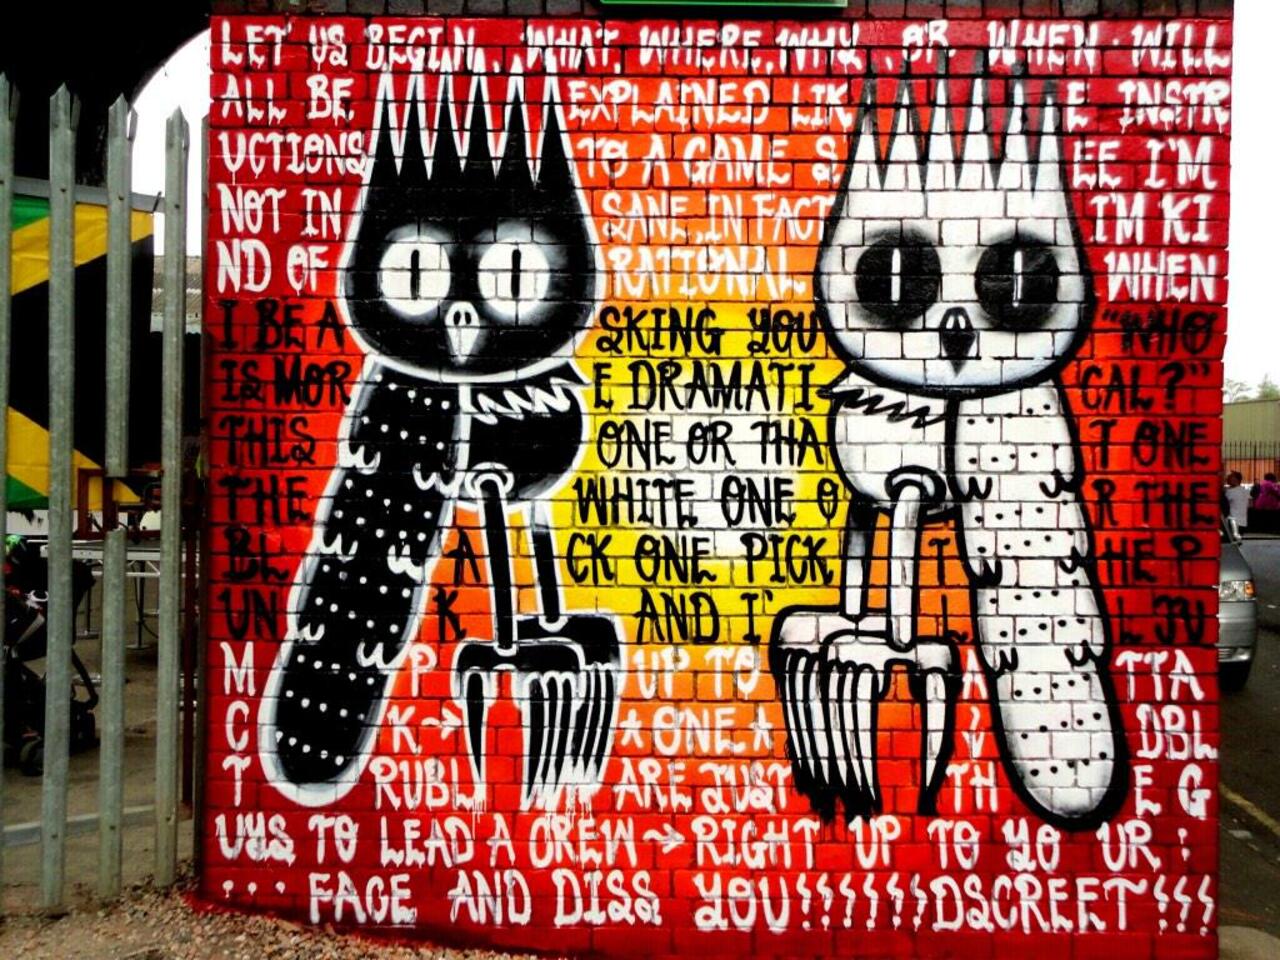 Wise owls from Dscreet : #Digbeth #Birmingham #graff #graffiti #mural #streetart #cityofcolours #custardfactory http://t.co/u2qKdtaRK7